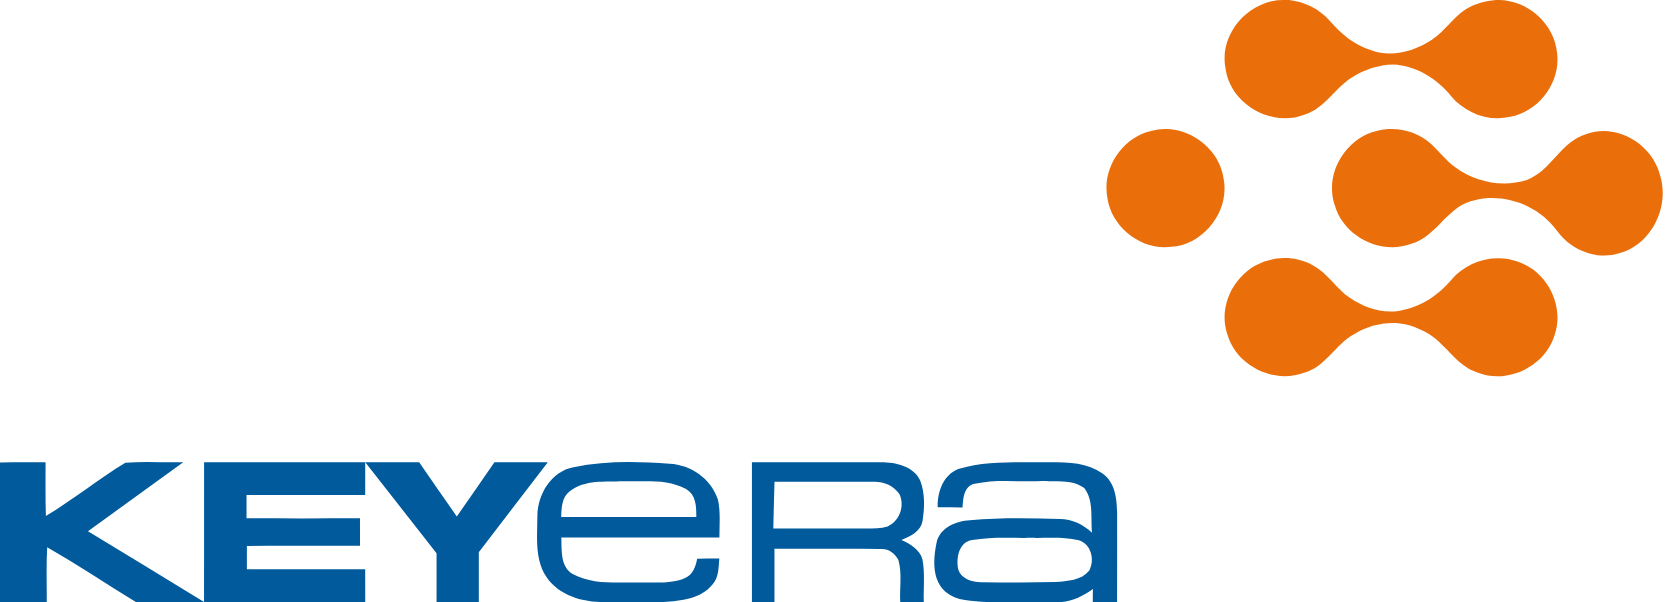 Keyera logo large (transparent PNG)